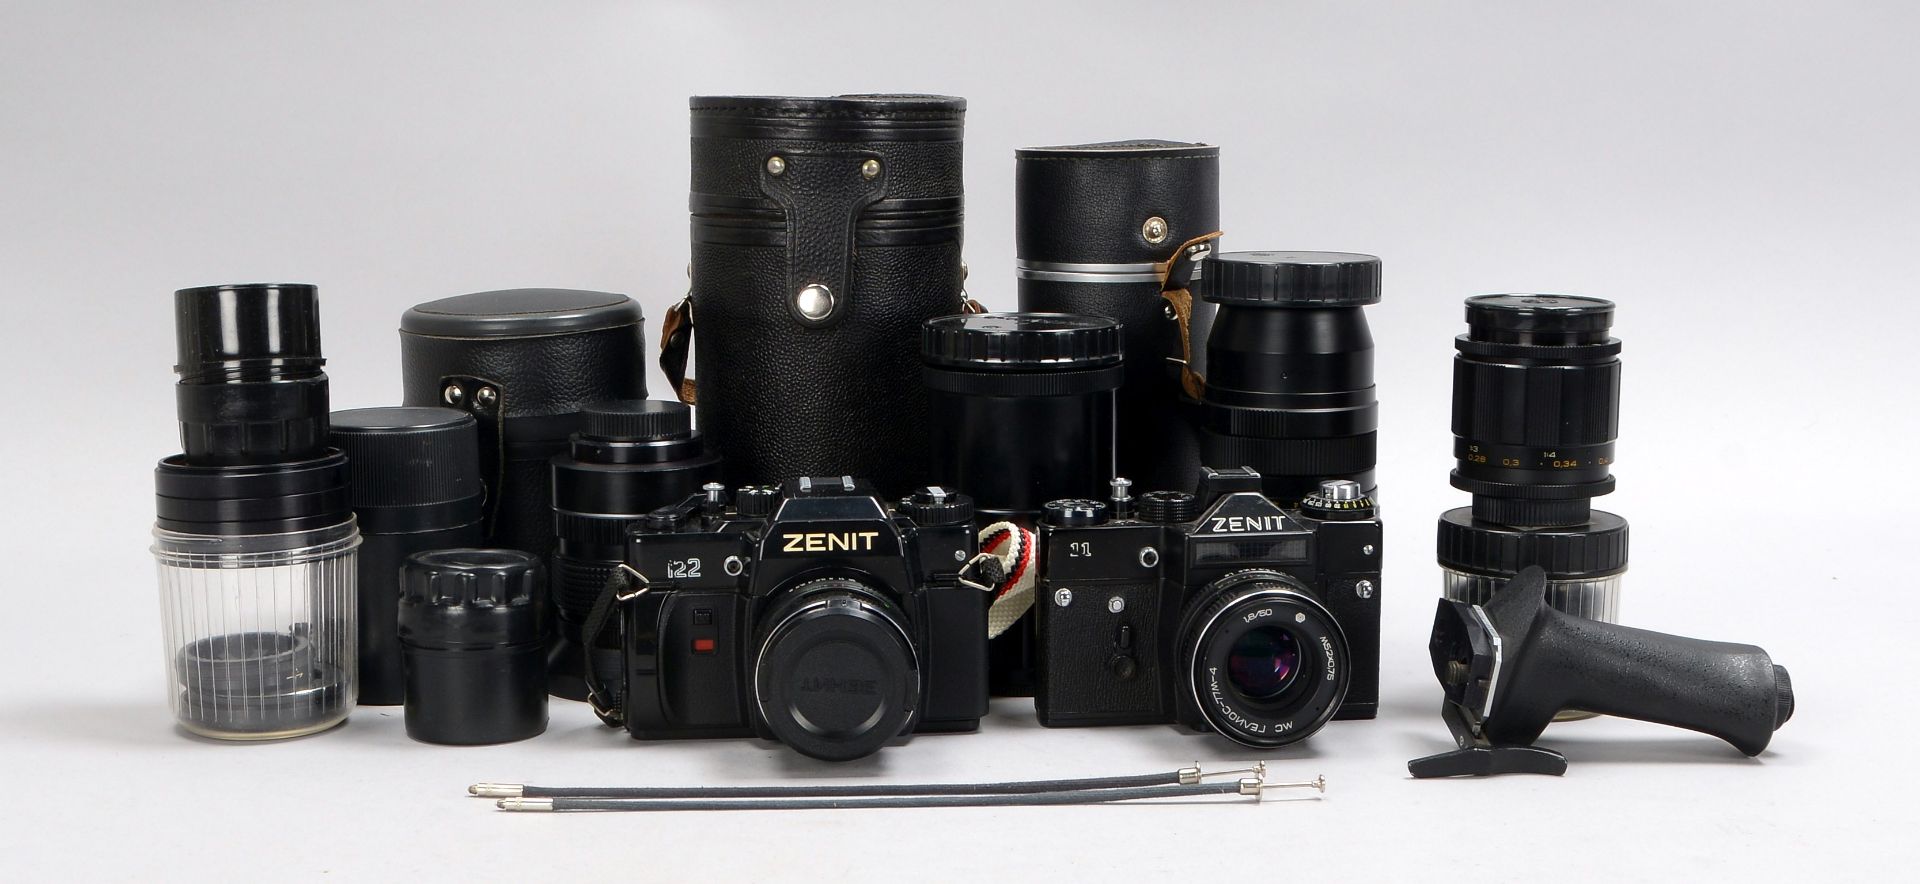 Fotografika-Konvolut, diverse Teile: 2x Kameras, 'Zenit', Objektiv 'MIR-16B', Objektiv 'Jupiter-21M'